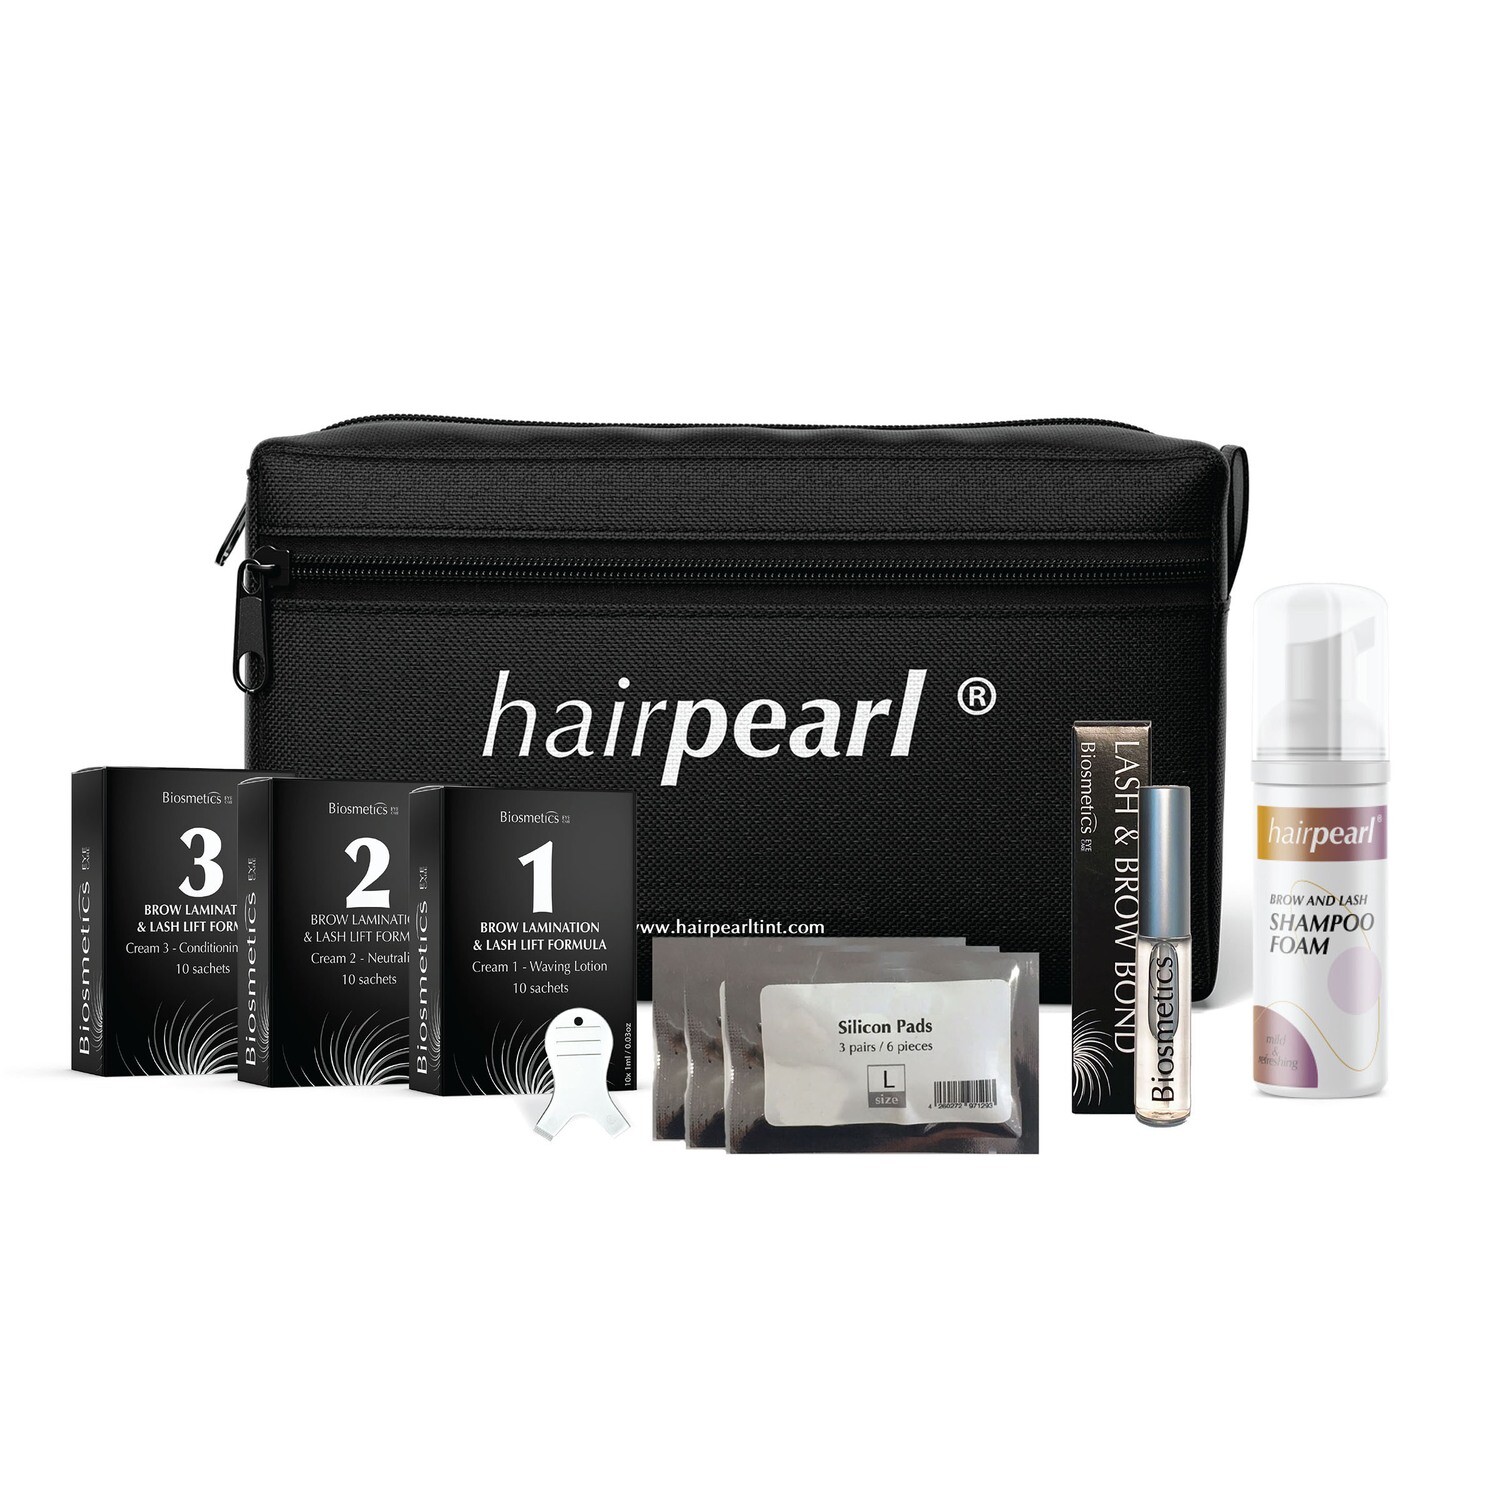 Hairpearl Lash Lift Starter Kit